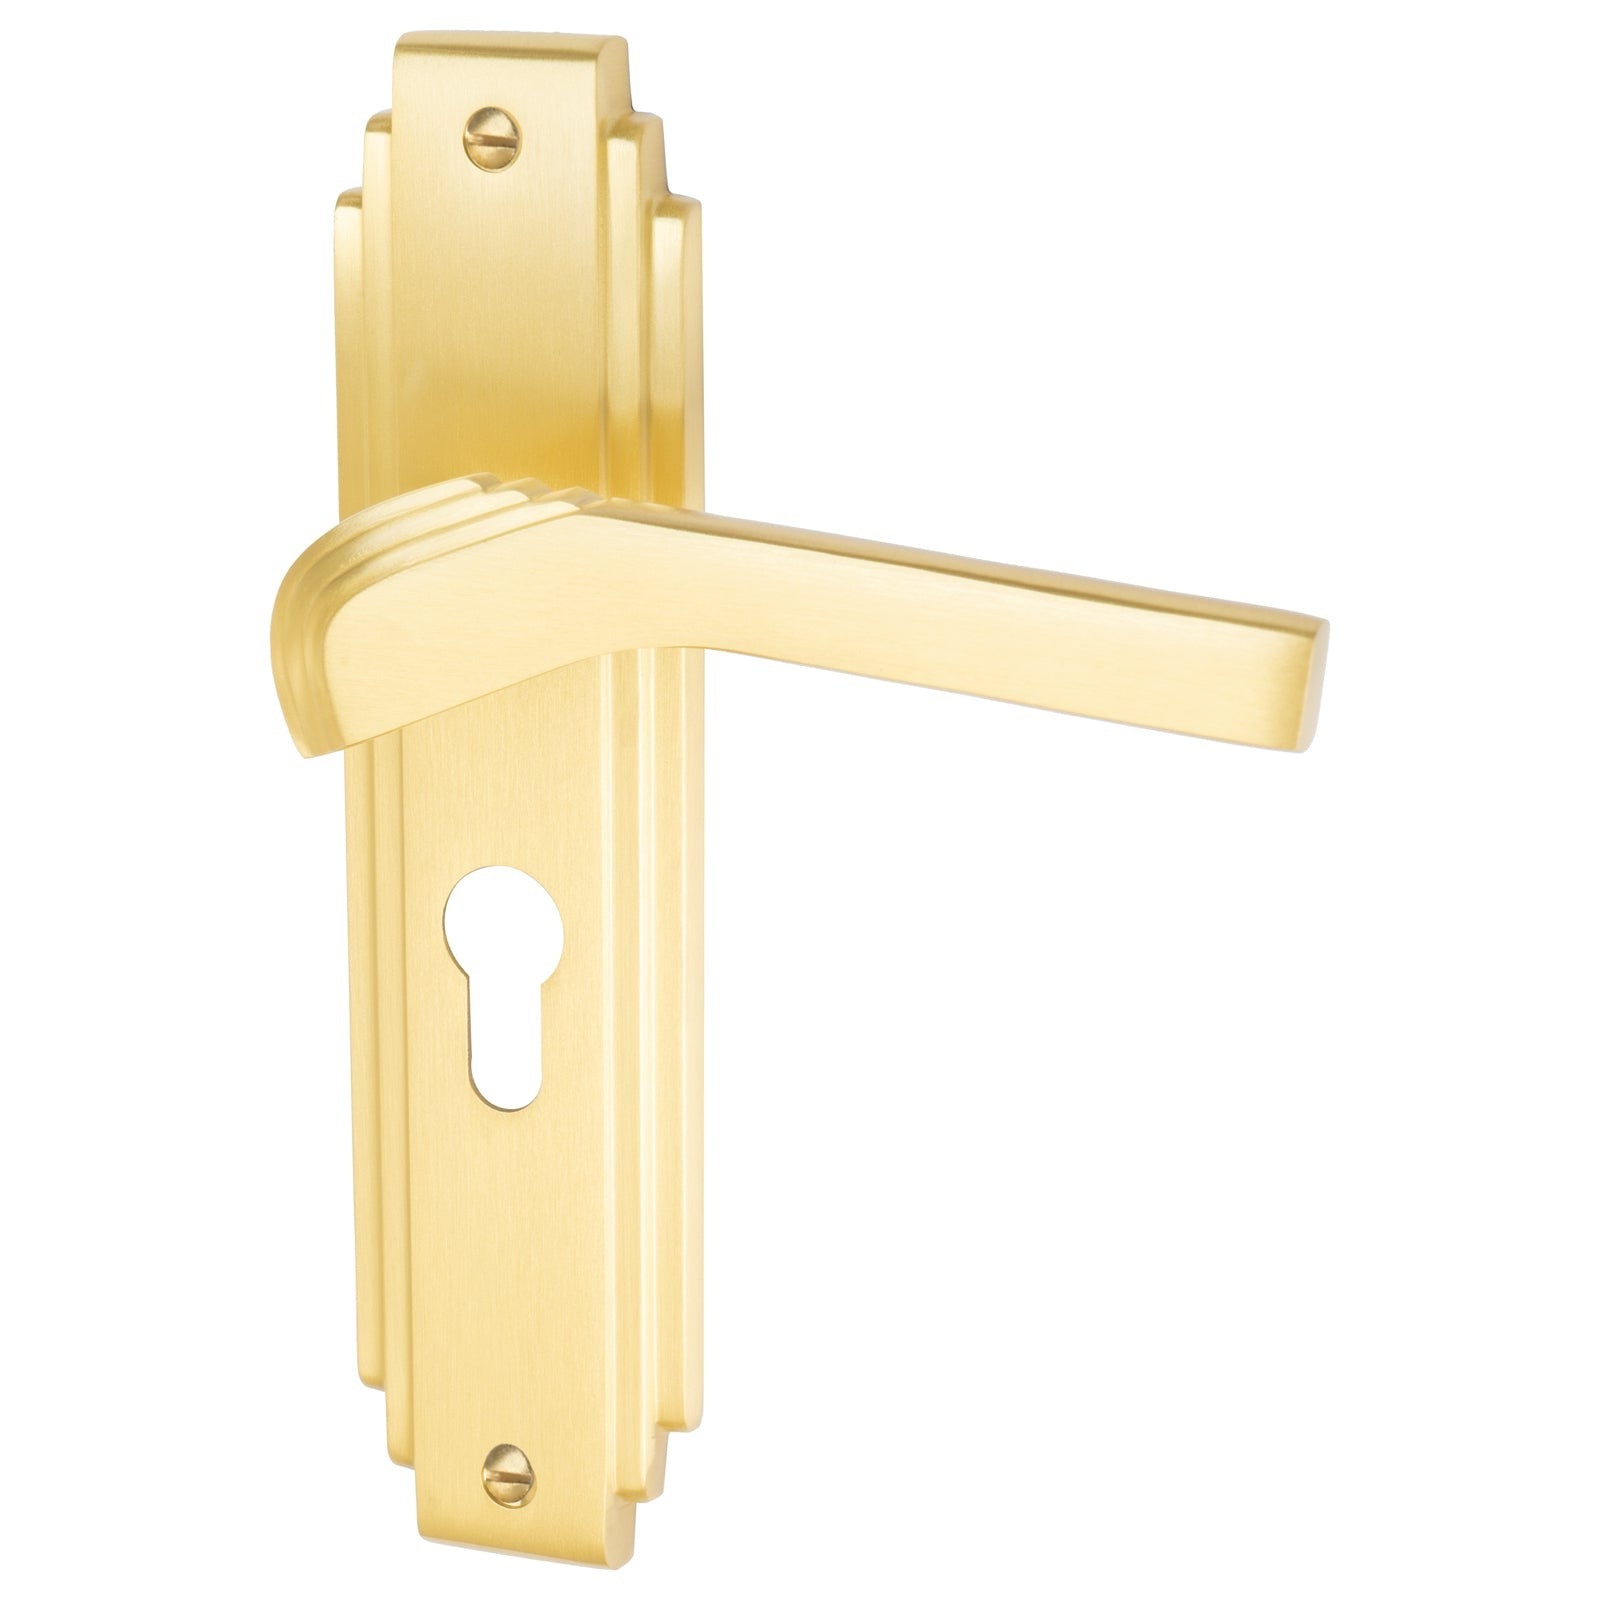 Tiffany Door Handles On Plate Euro Lock Handle in Satin Brass 